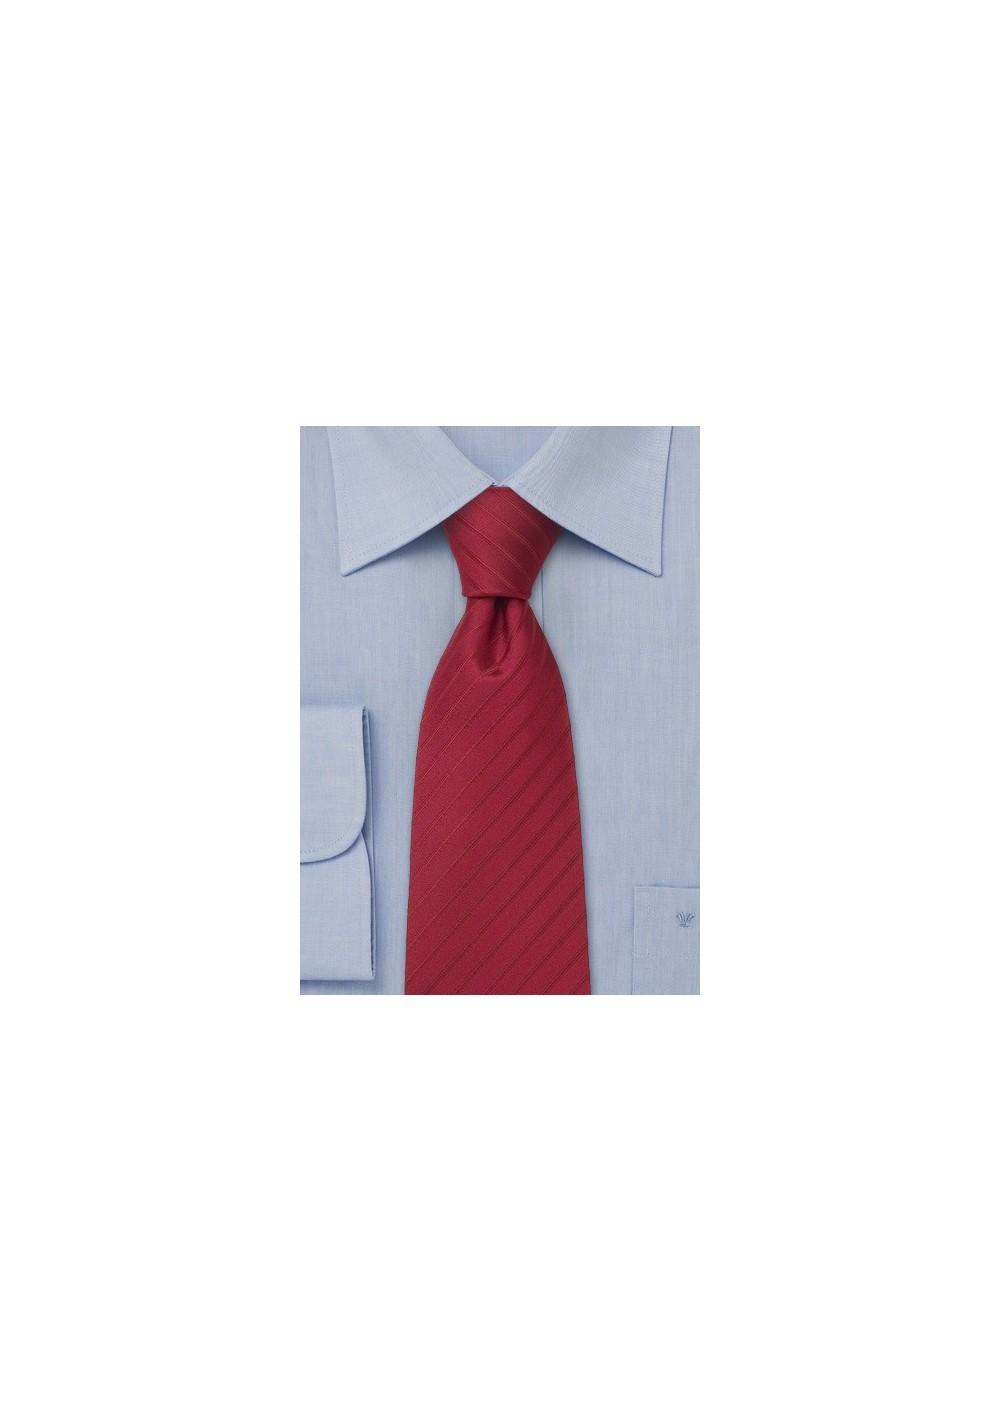 Red silk necktie - Handmade striped tie in venetian red